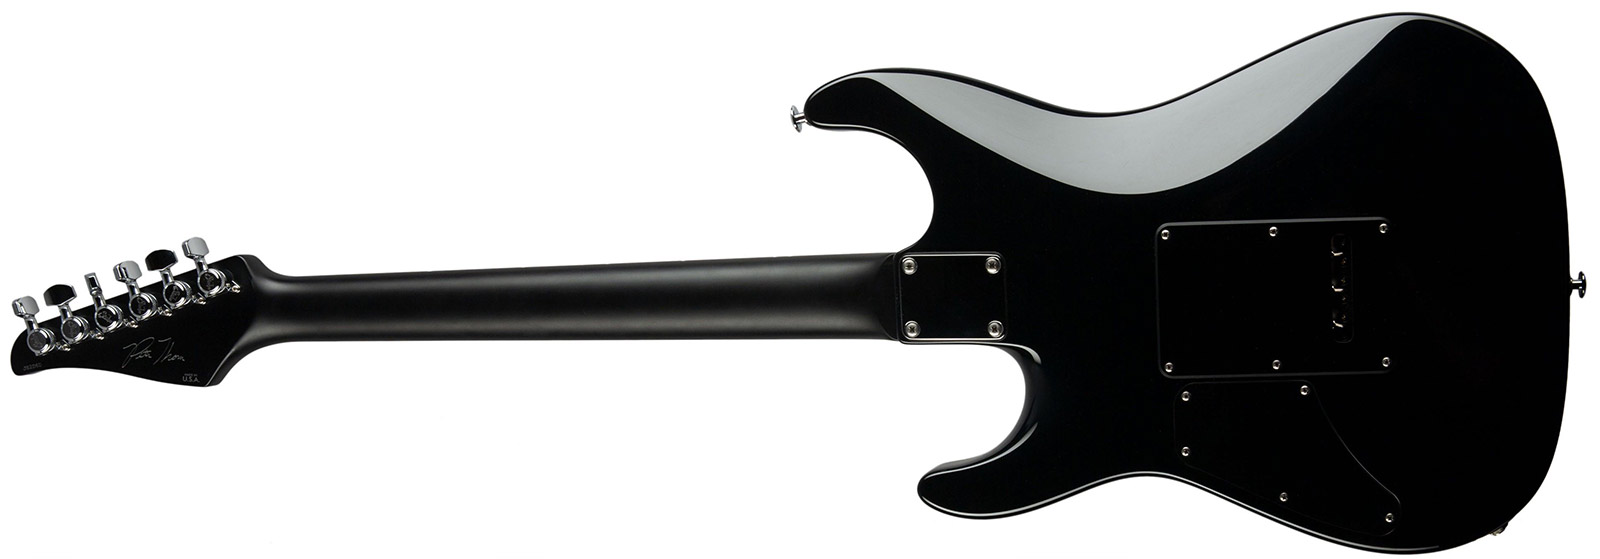 Suhr Pete Thorn Standard 01-sig-0029 Signature 2h Trem Rw - Garnet Red - Str shape electric guitar - Variation 1